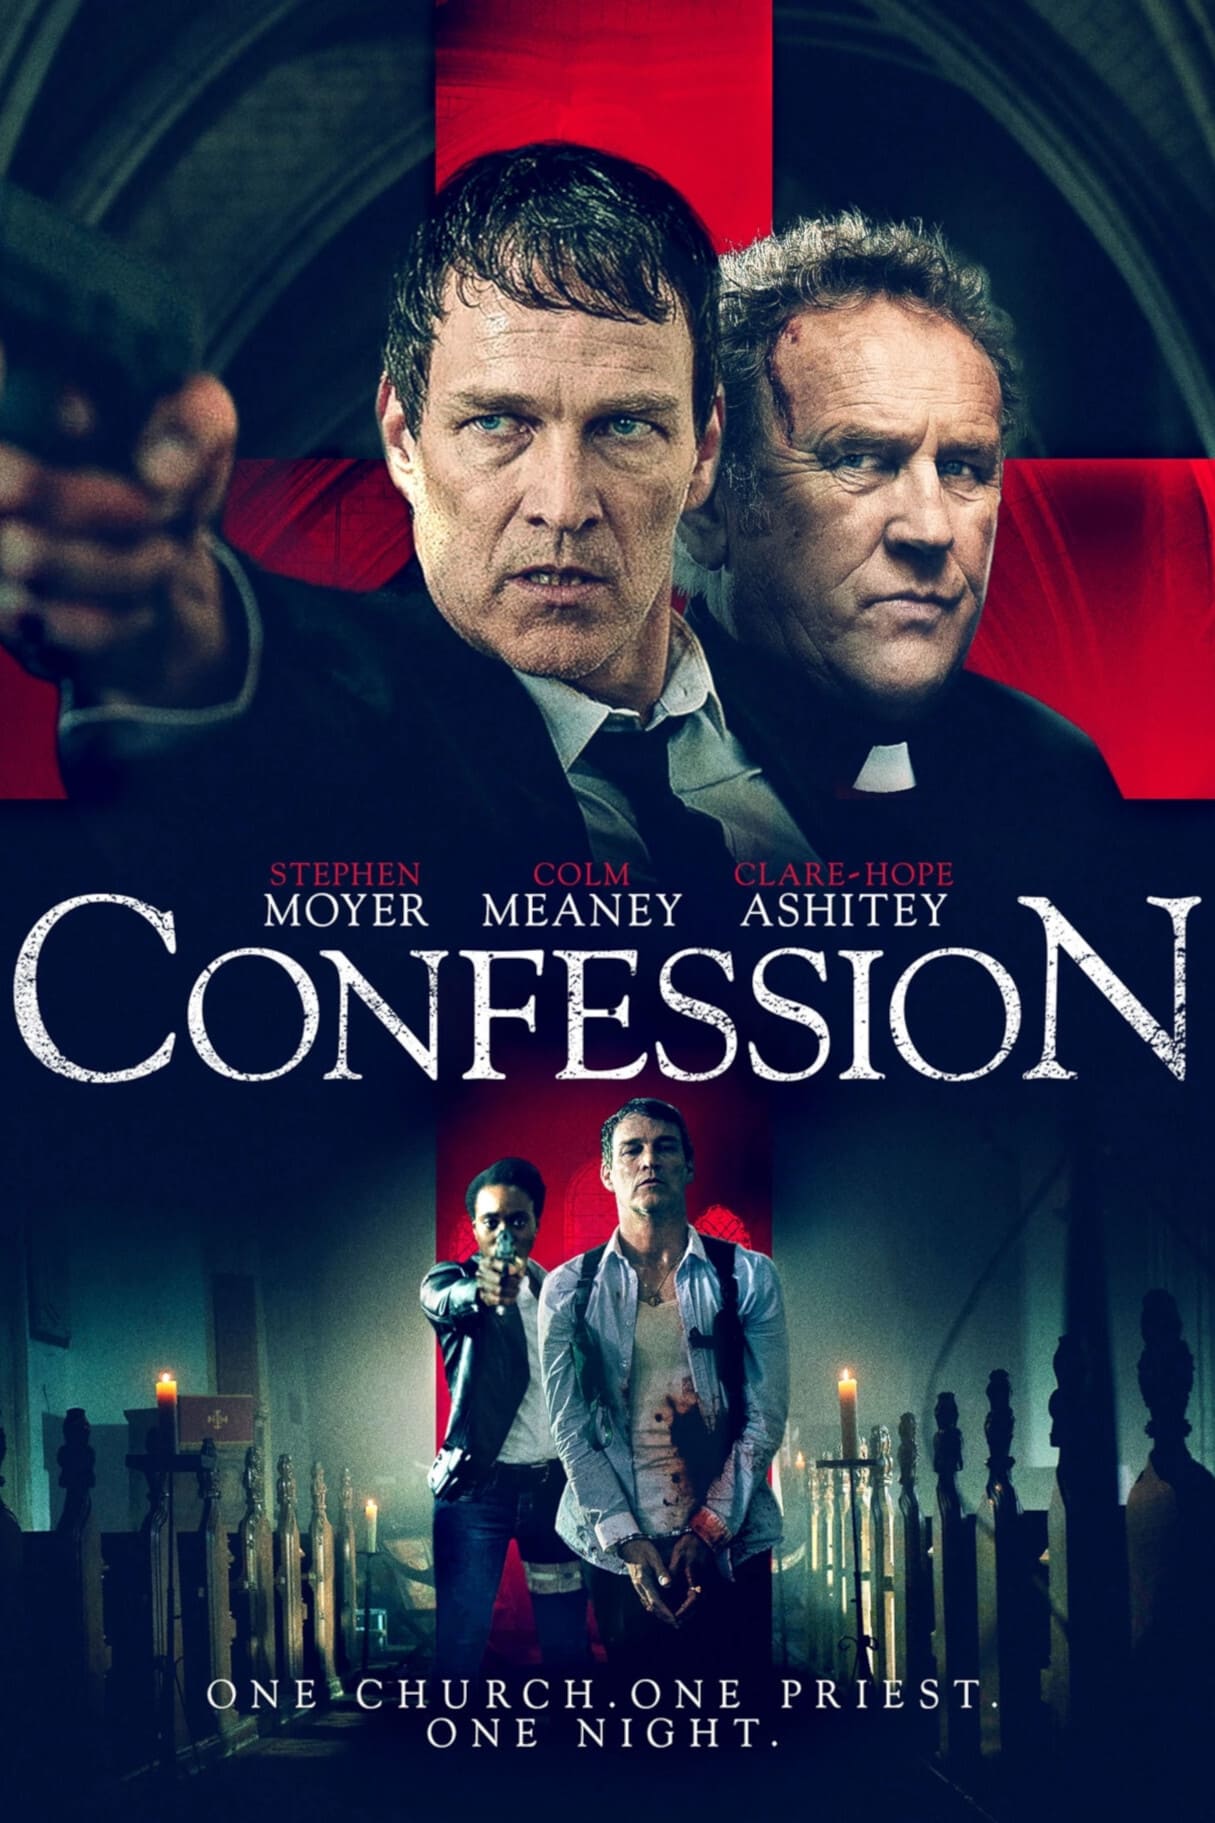 Confession poster